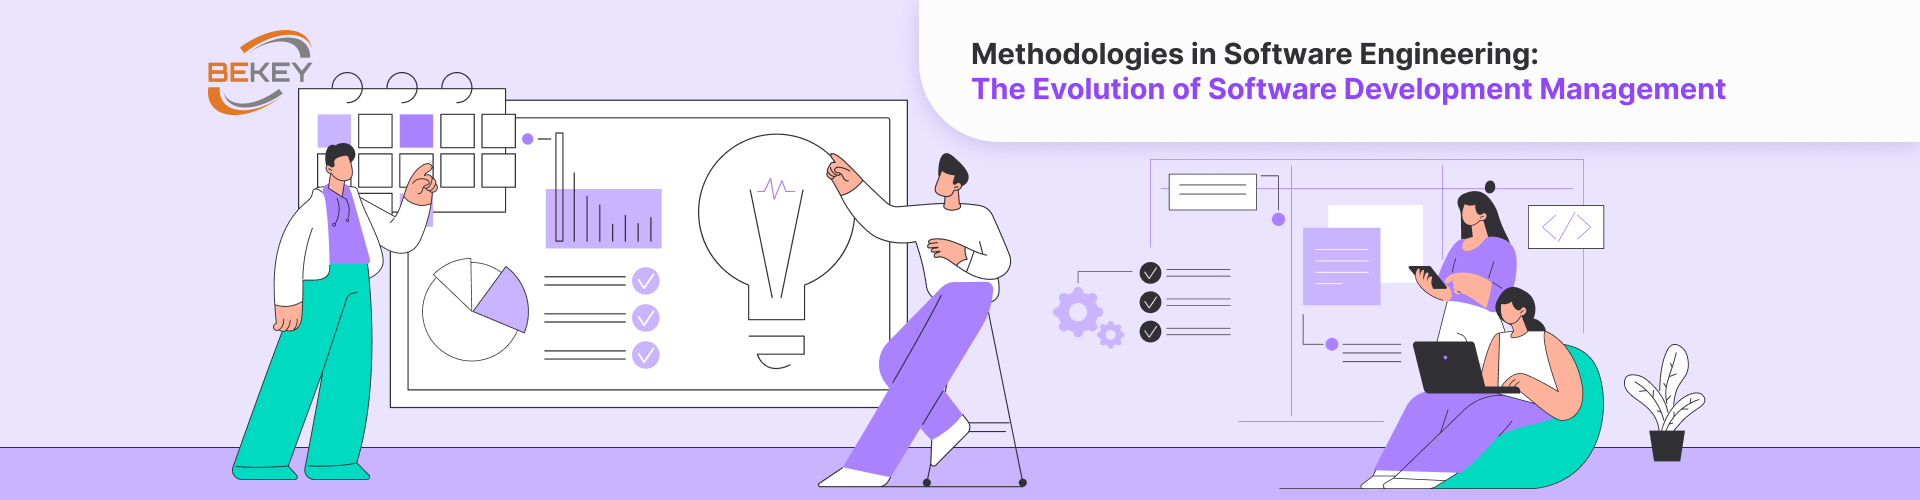 Methodologies in Software Engineering: The Evolution of Software Development Management - image